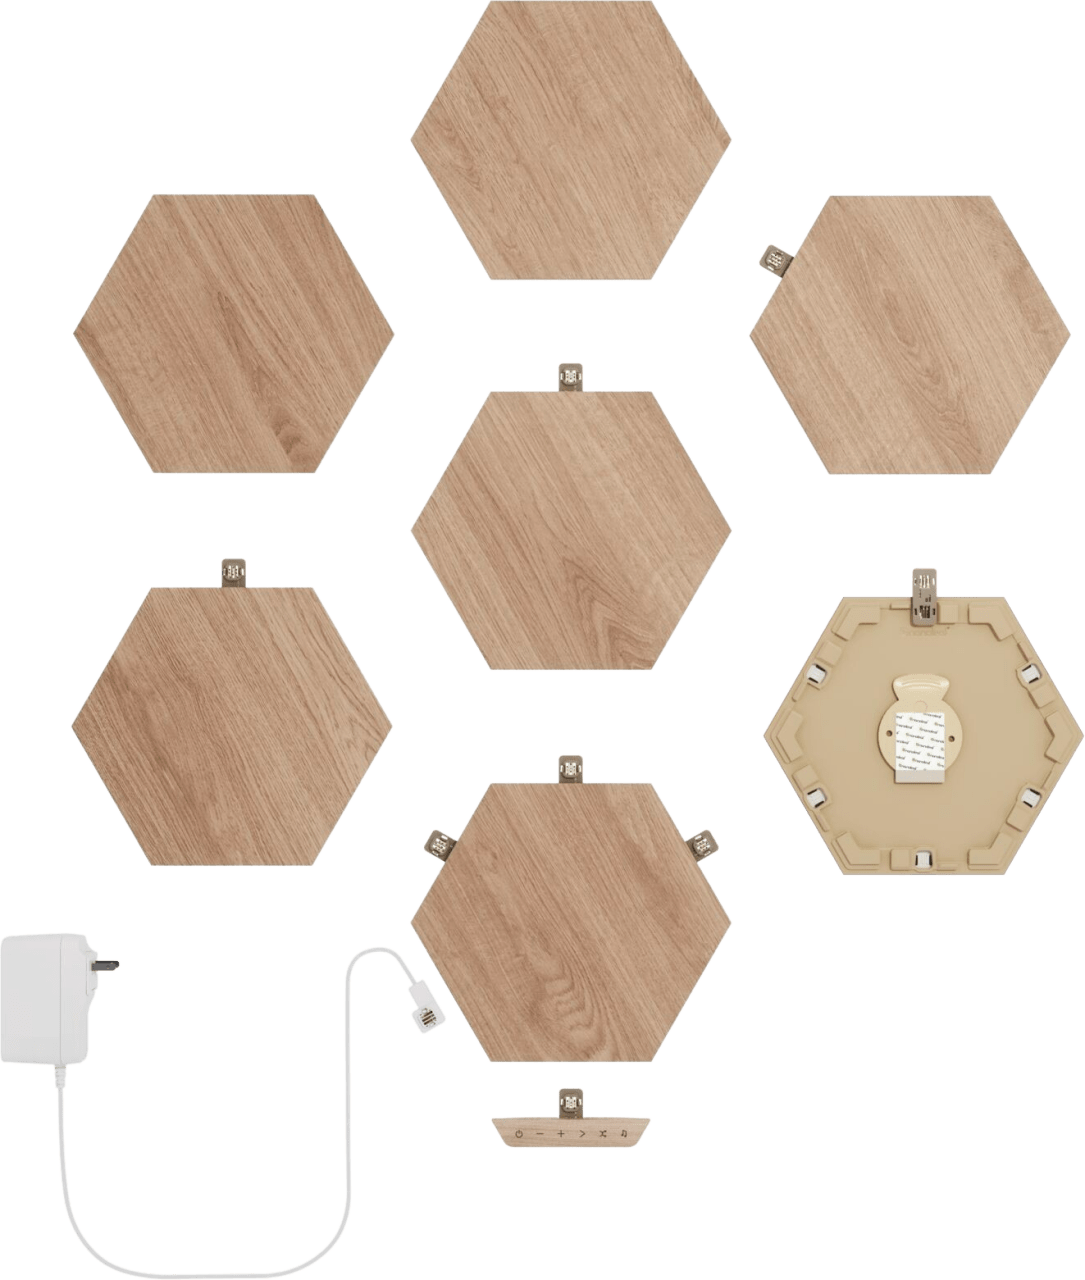 Wood Nanoleaf Elements Wood Look Hexagons Starter Kit 7x.2